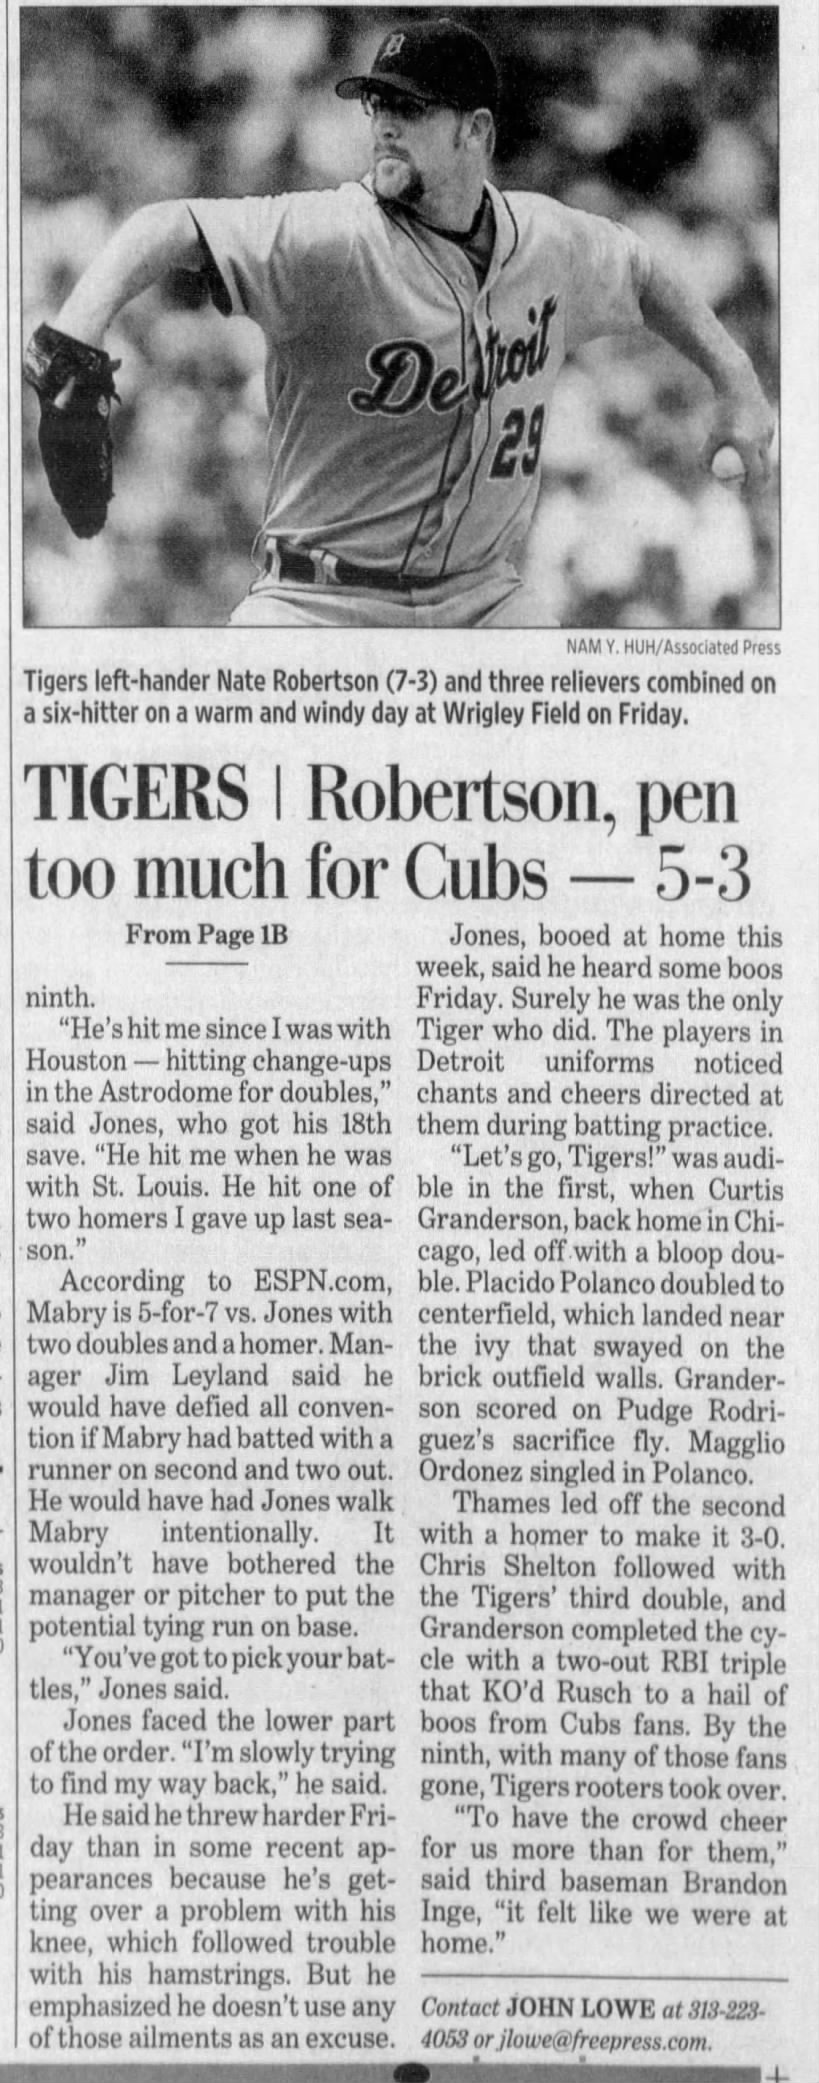 Sat 6/17/2006: Tigers at Wrigley - Game 1 (pg 2)